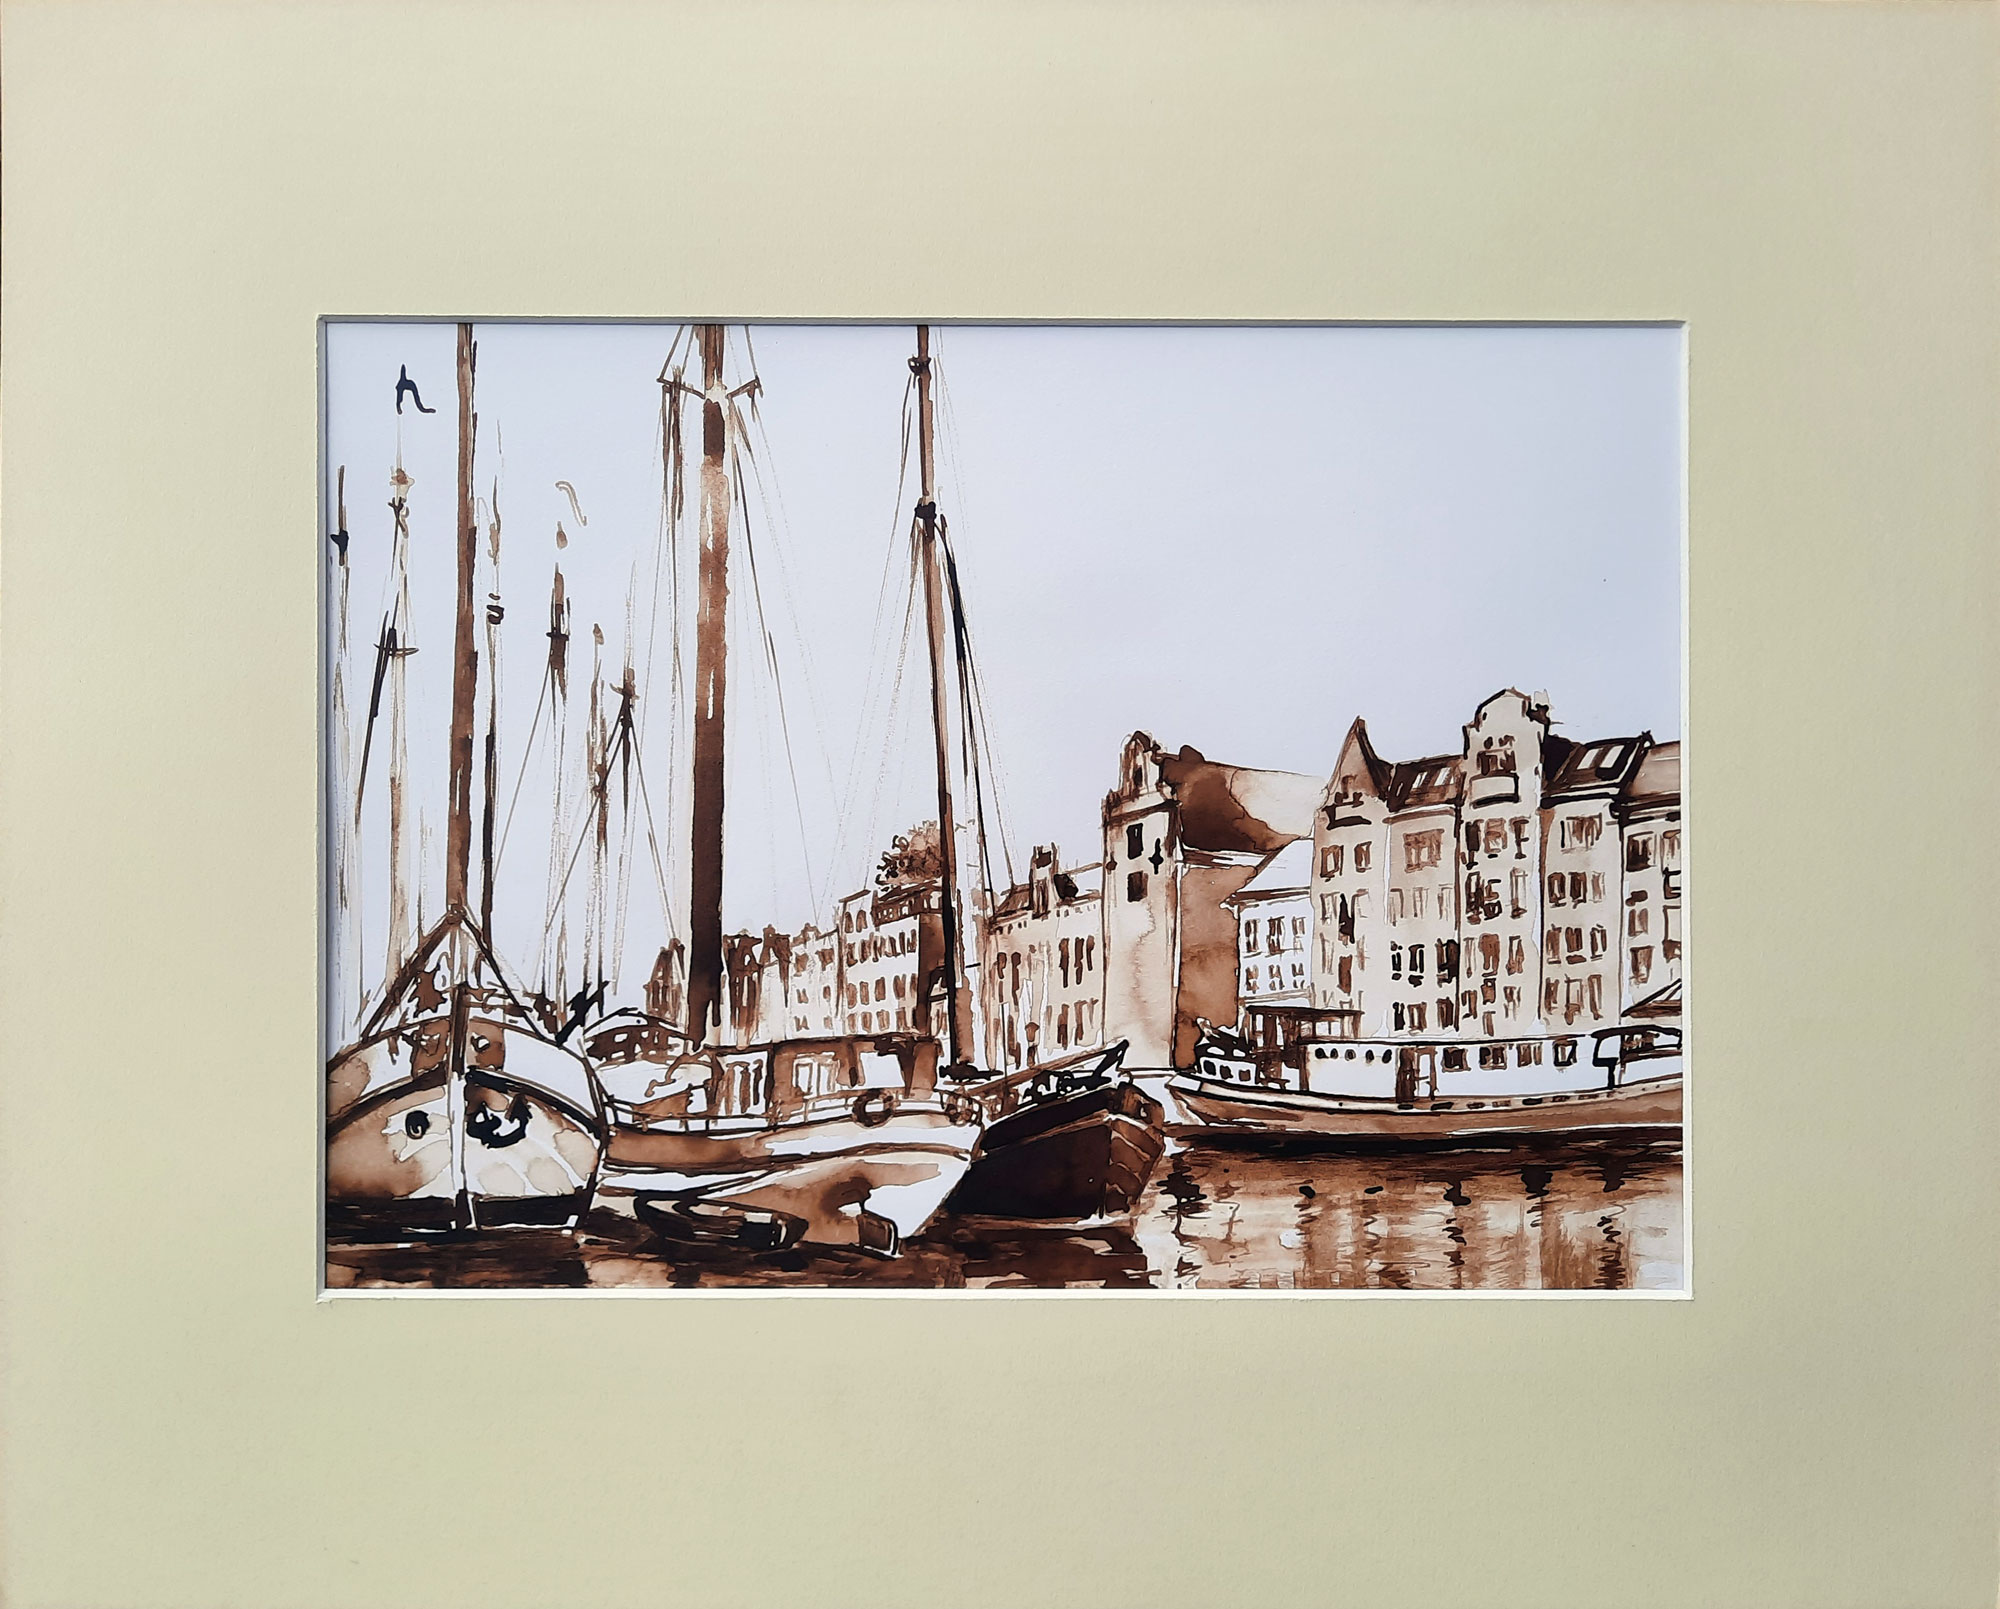 Featured image for “Dordrecht”